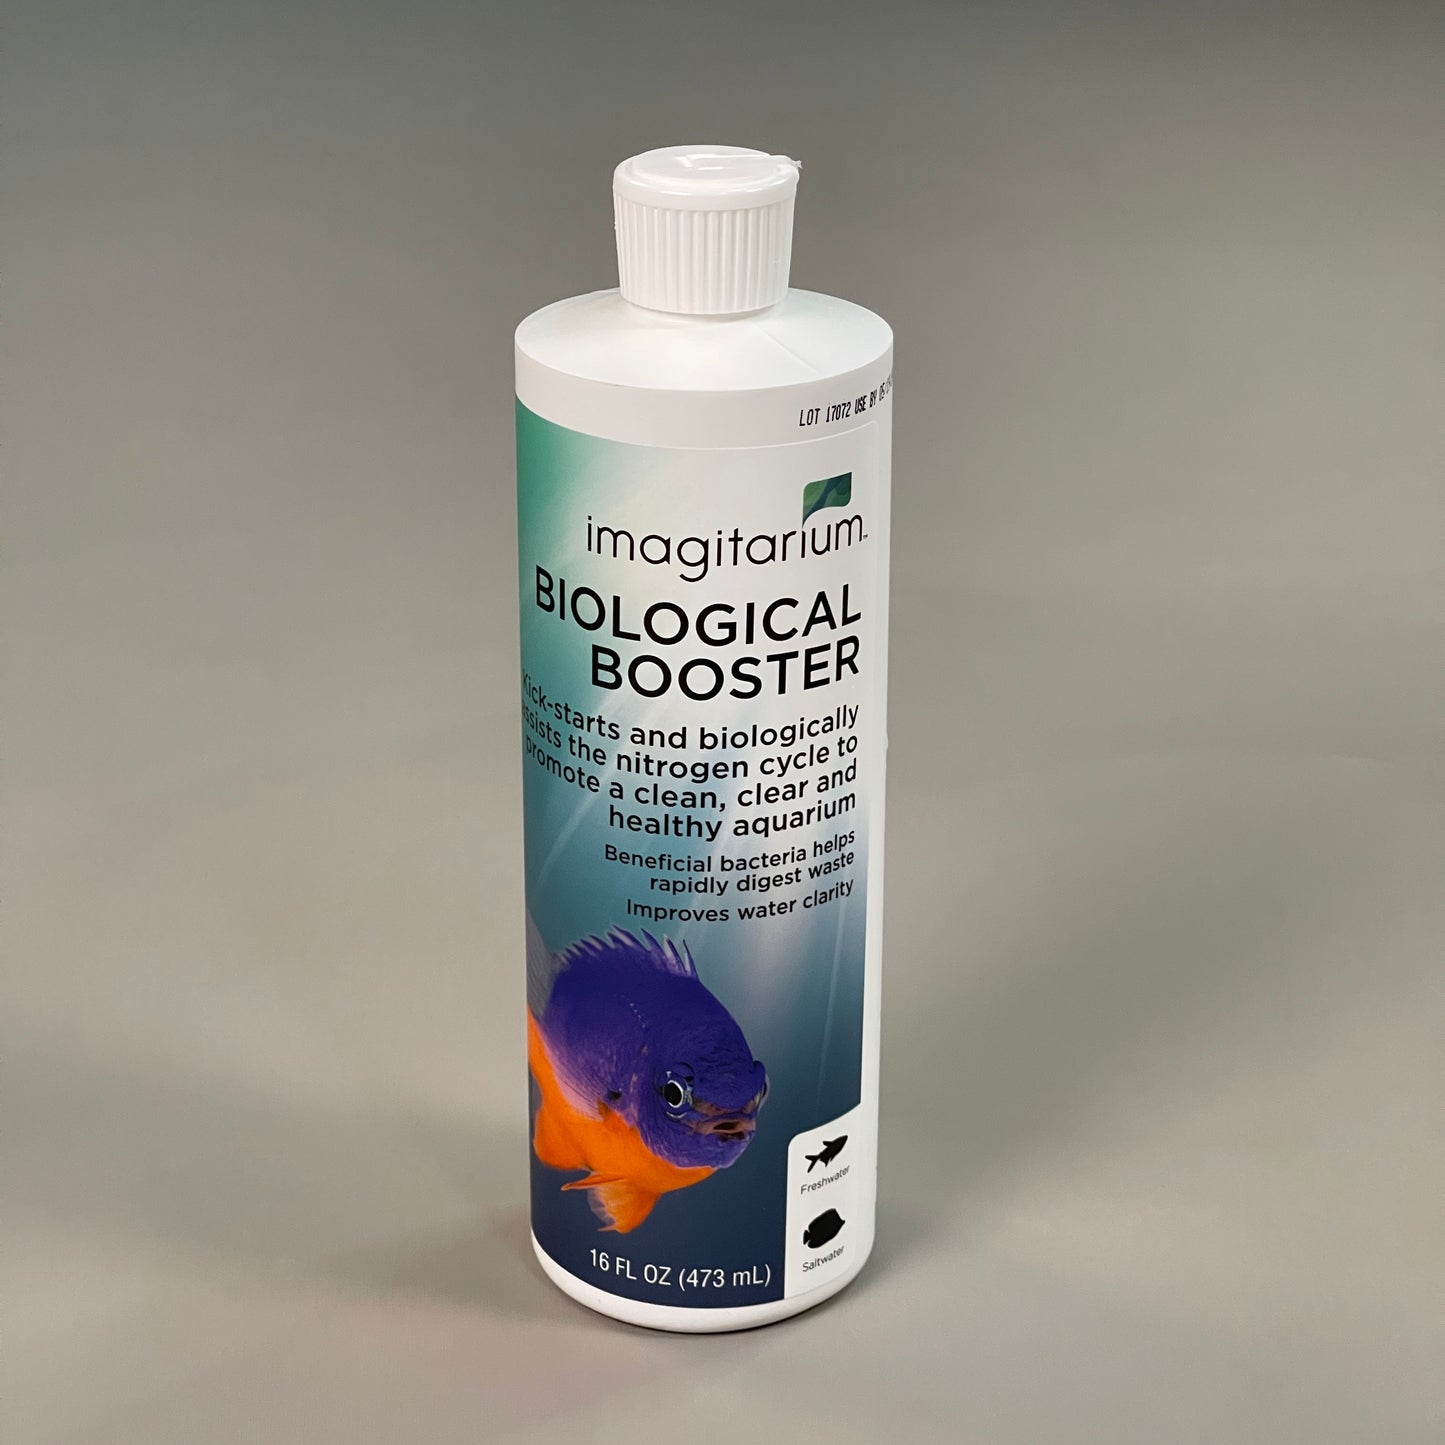 Imagitarium Biological Booster Kick-Starts & Assist Nitrogen Cycle 16 OZ Best By 5/24 (New)